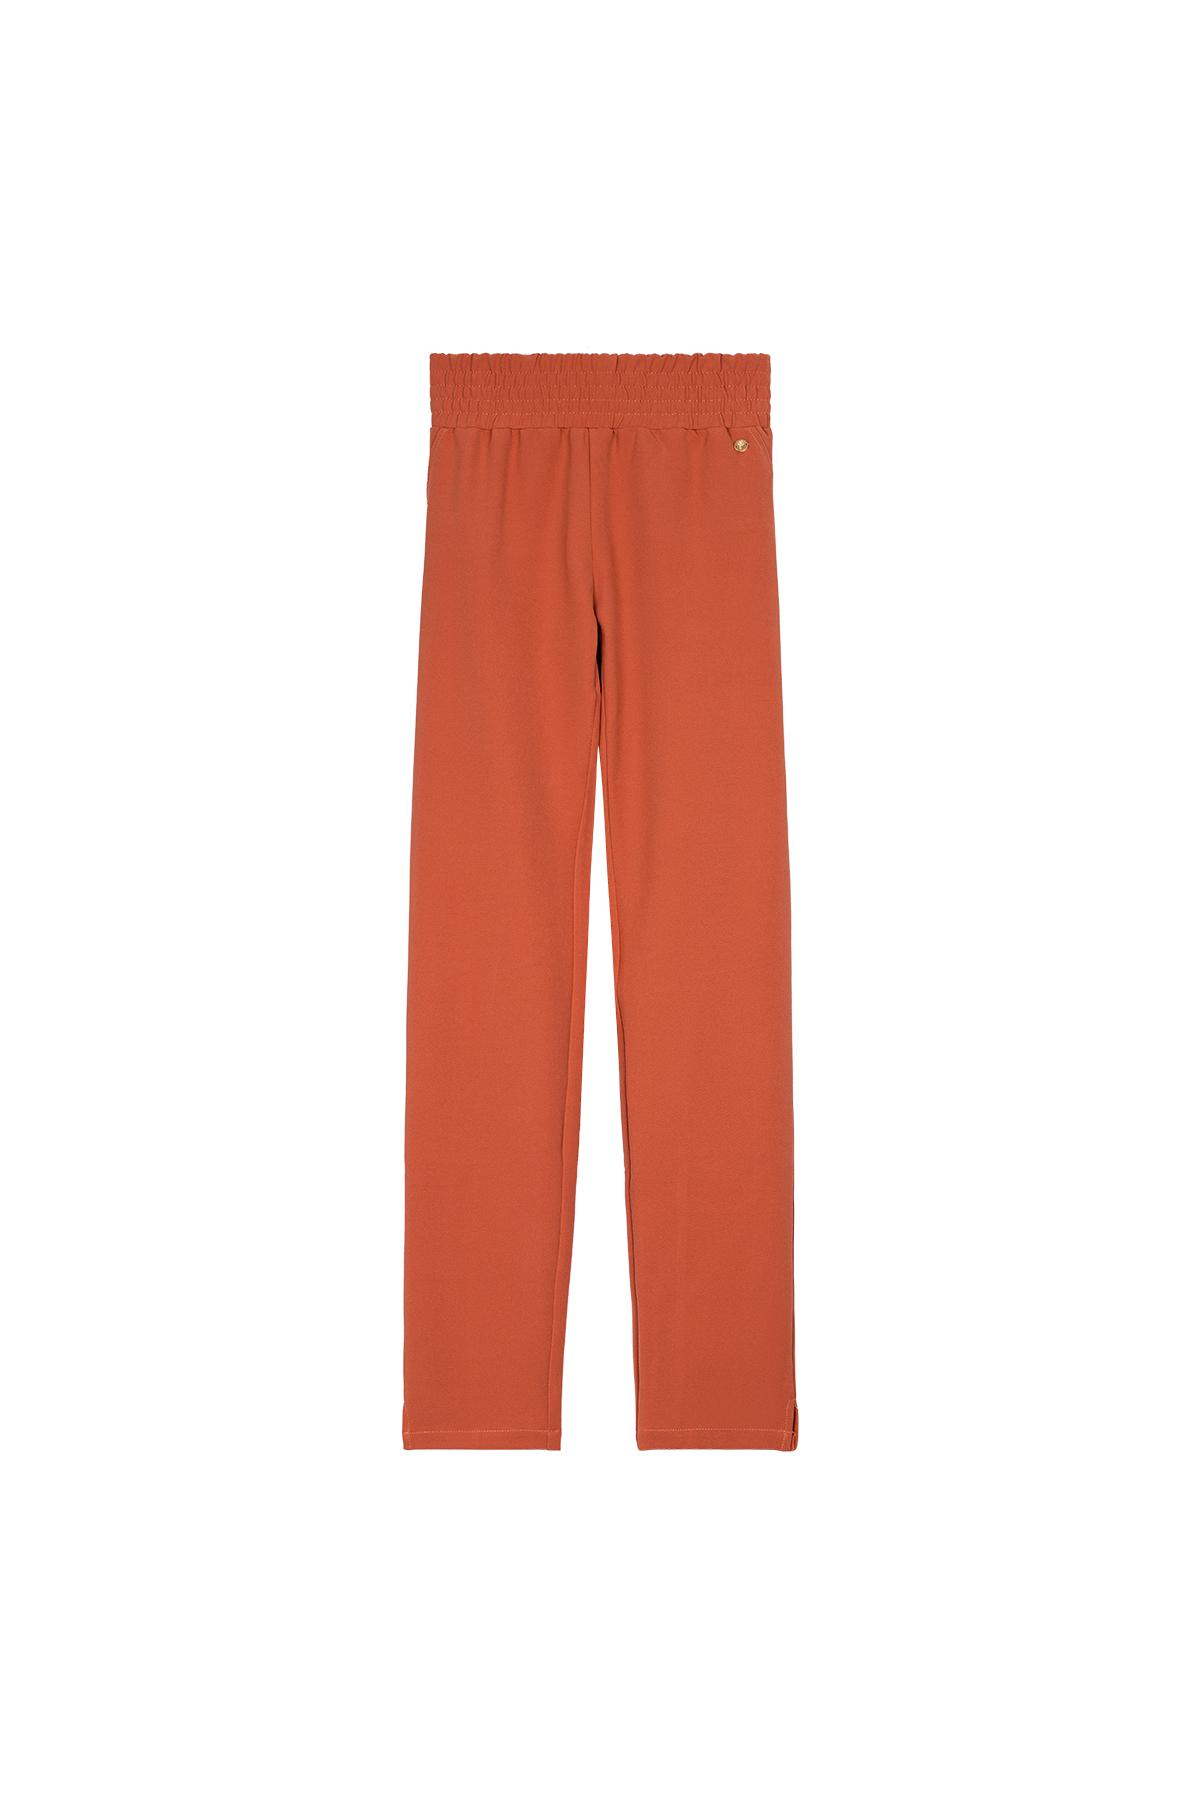 Slim fit pants Orange L 